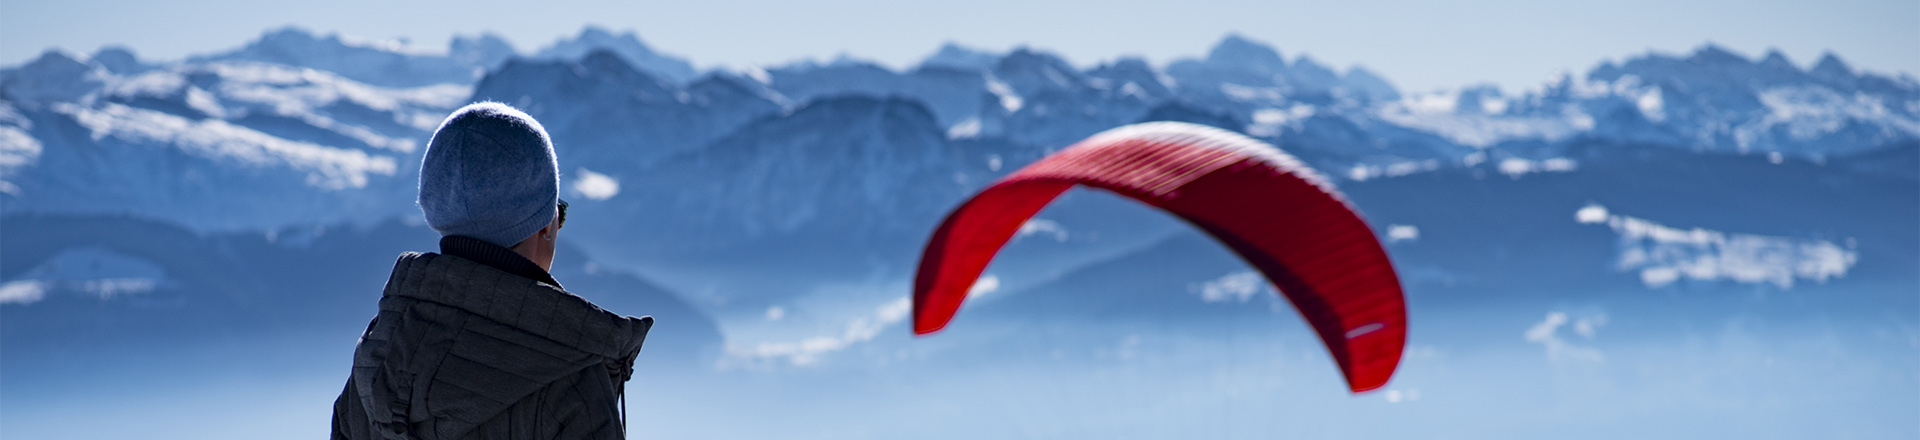 sport d’hivervénements alpins